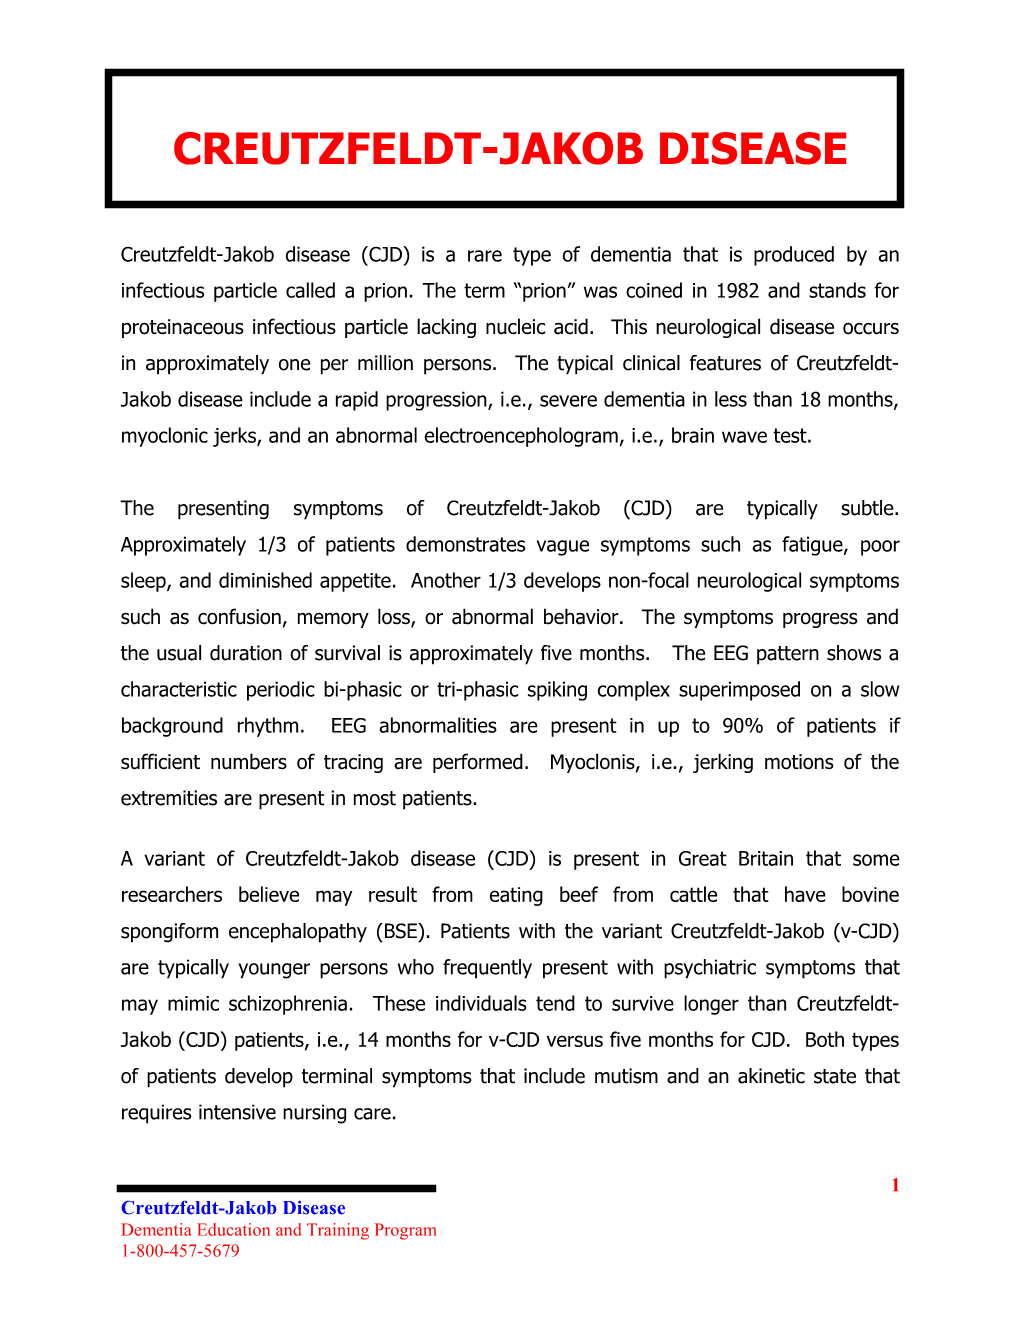 Creutzfeld S-Jakob Disease